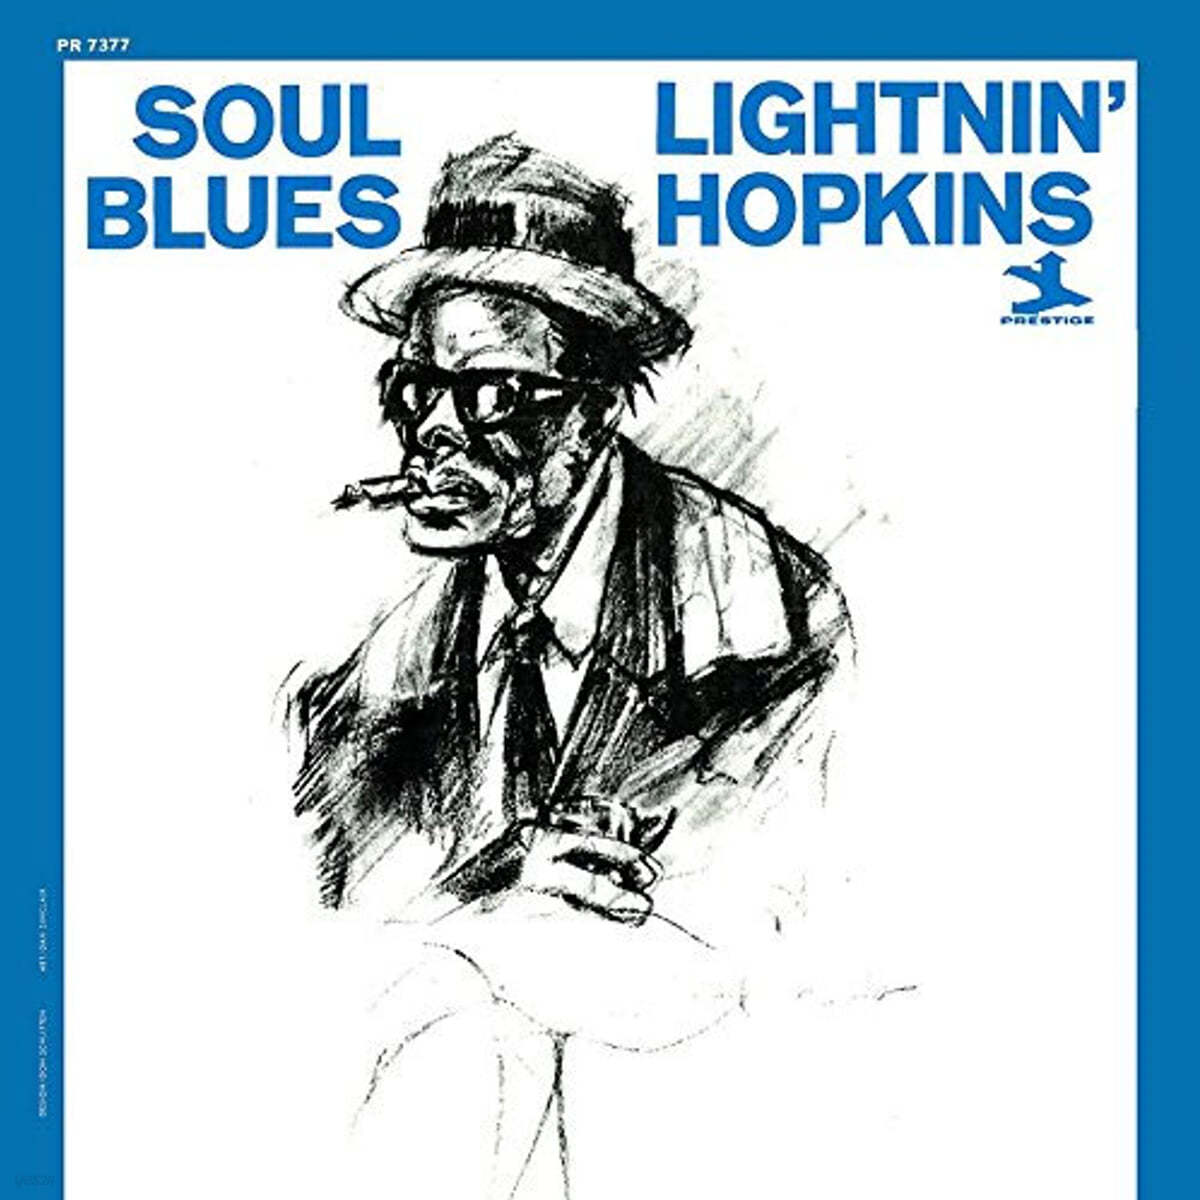 Lightnin' Hopkins - Soul Blues [LP]